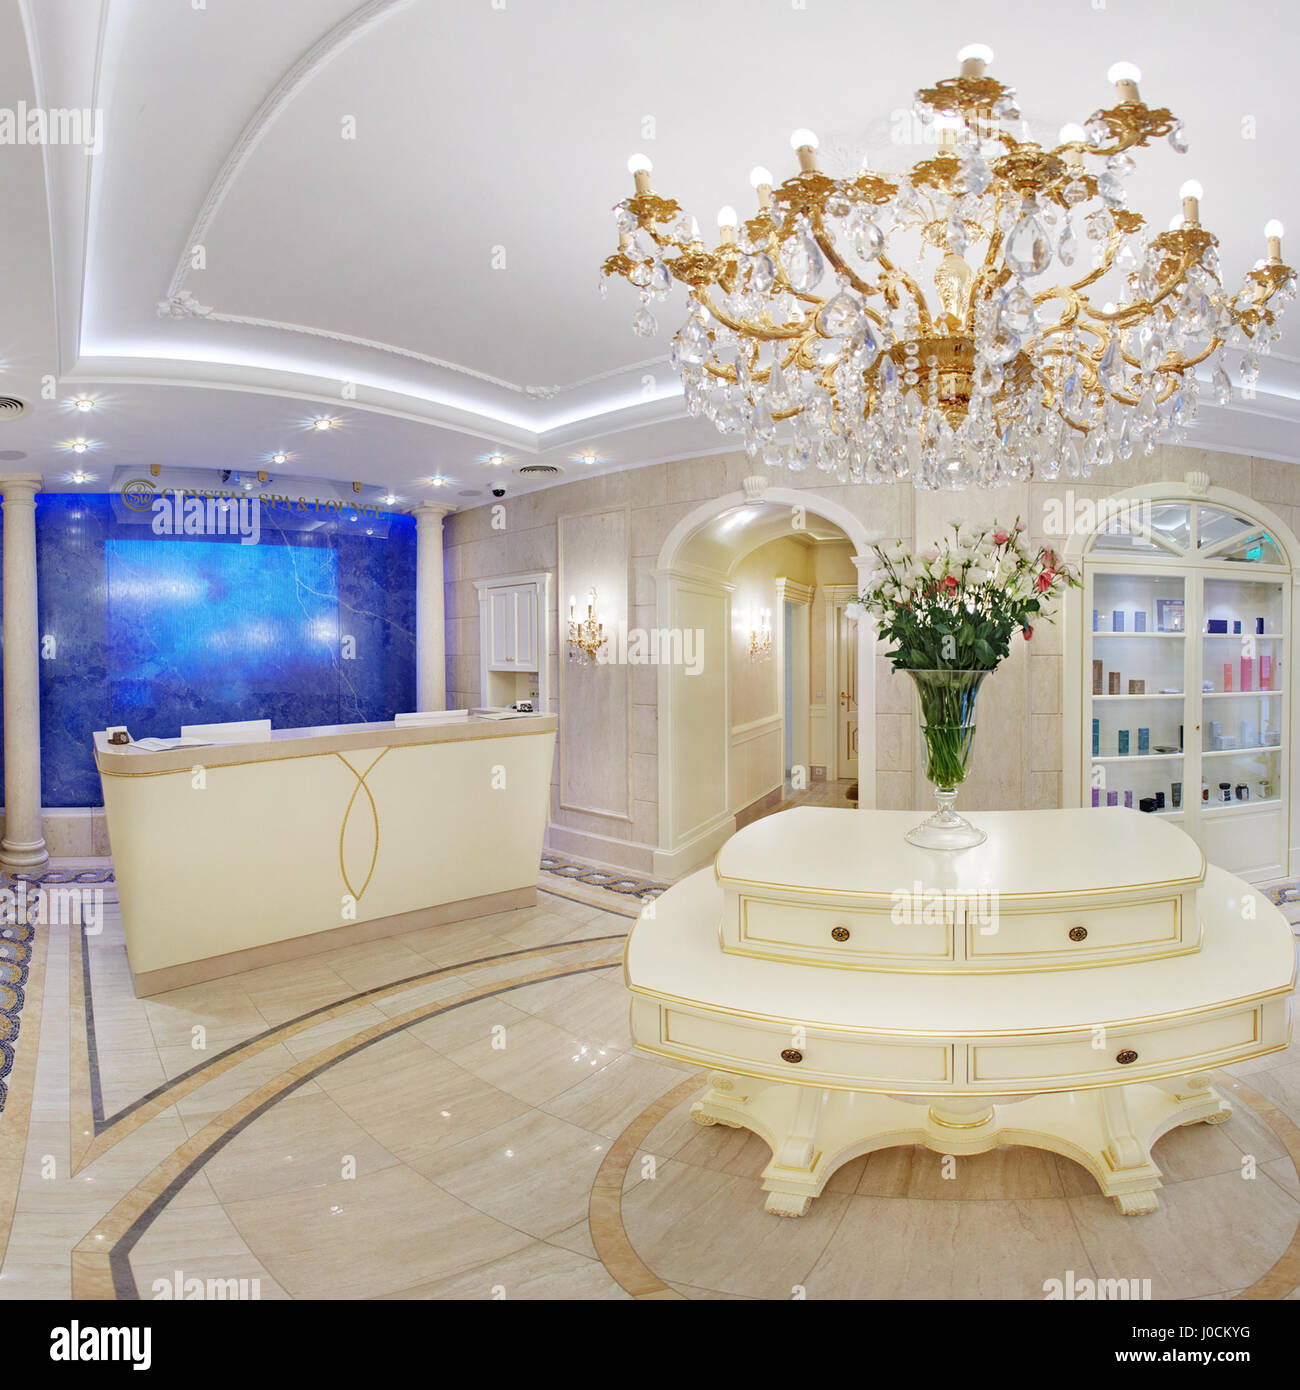 The view of Interior beauty salon Stock Photo